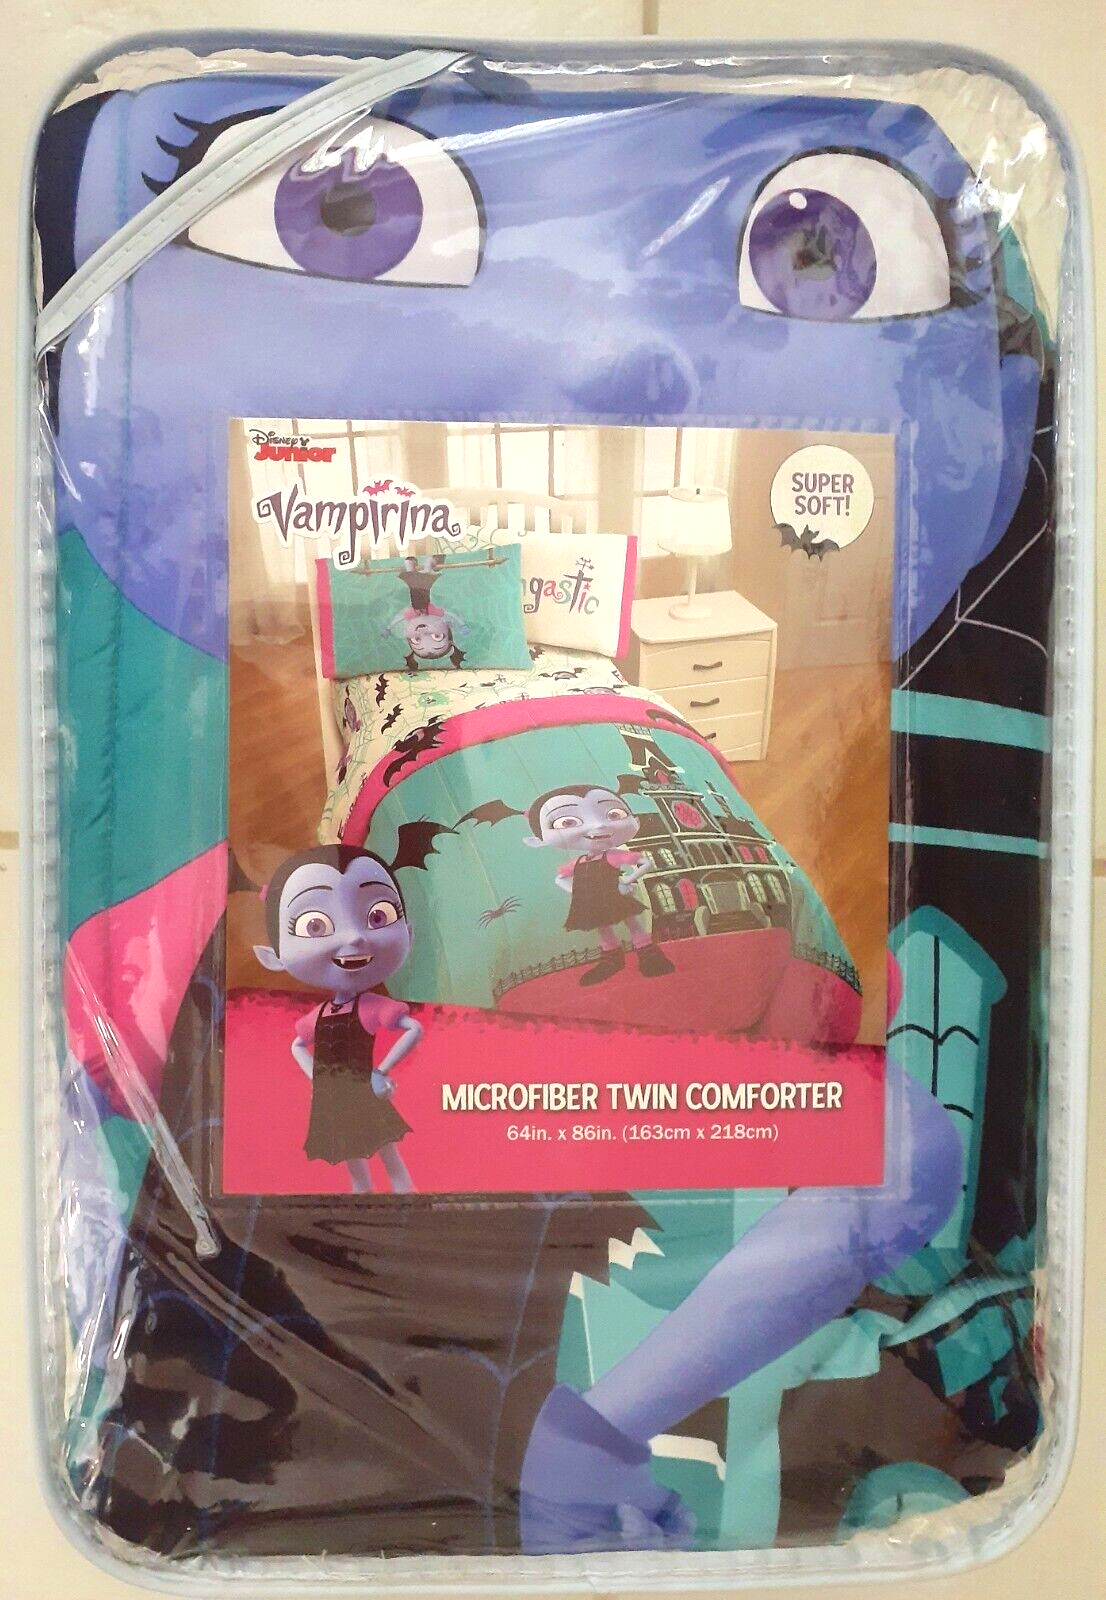 Disney Junior VAMPIRINA Microfiber TWIN Comforter 64"x86" NEW in BAG - $89.95